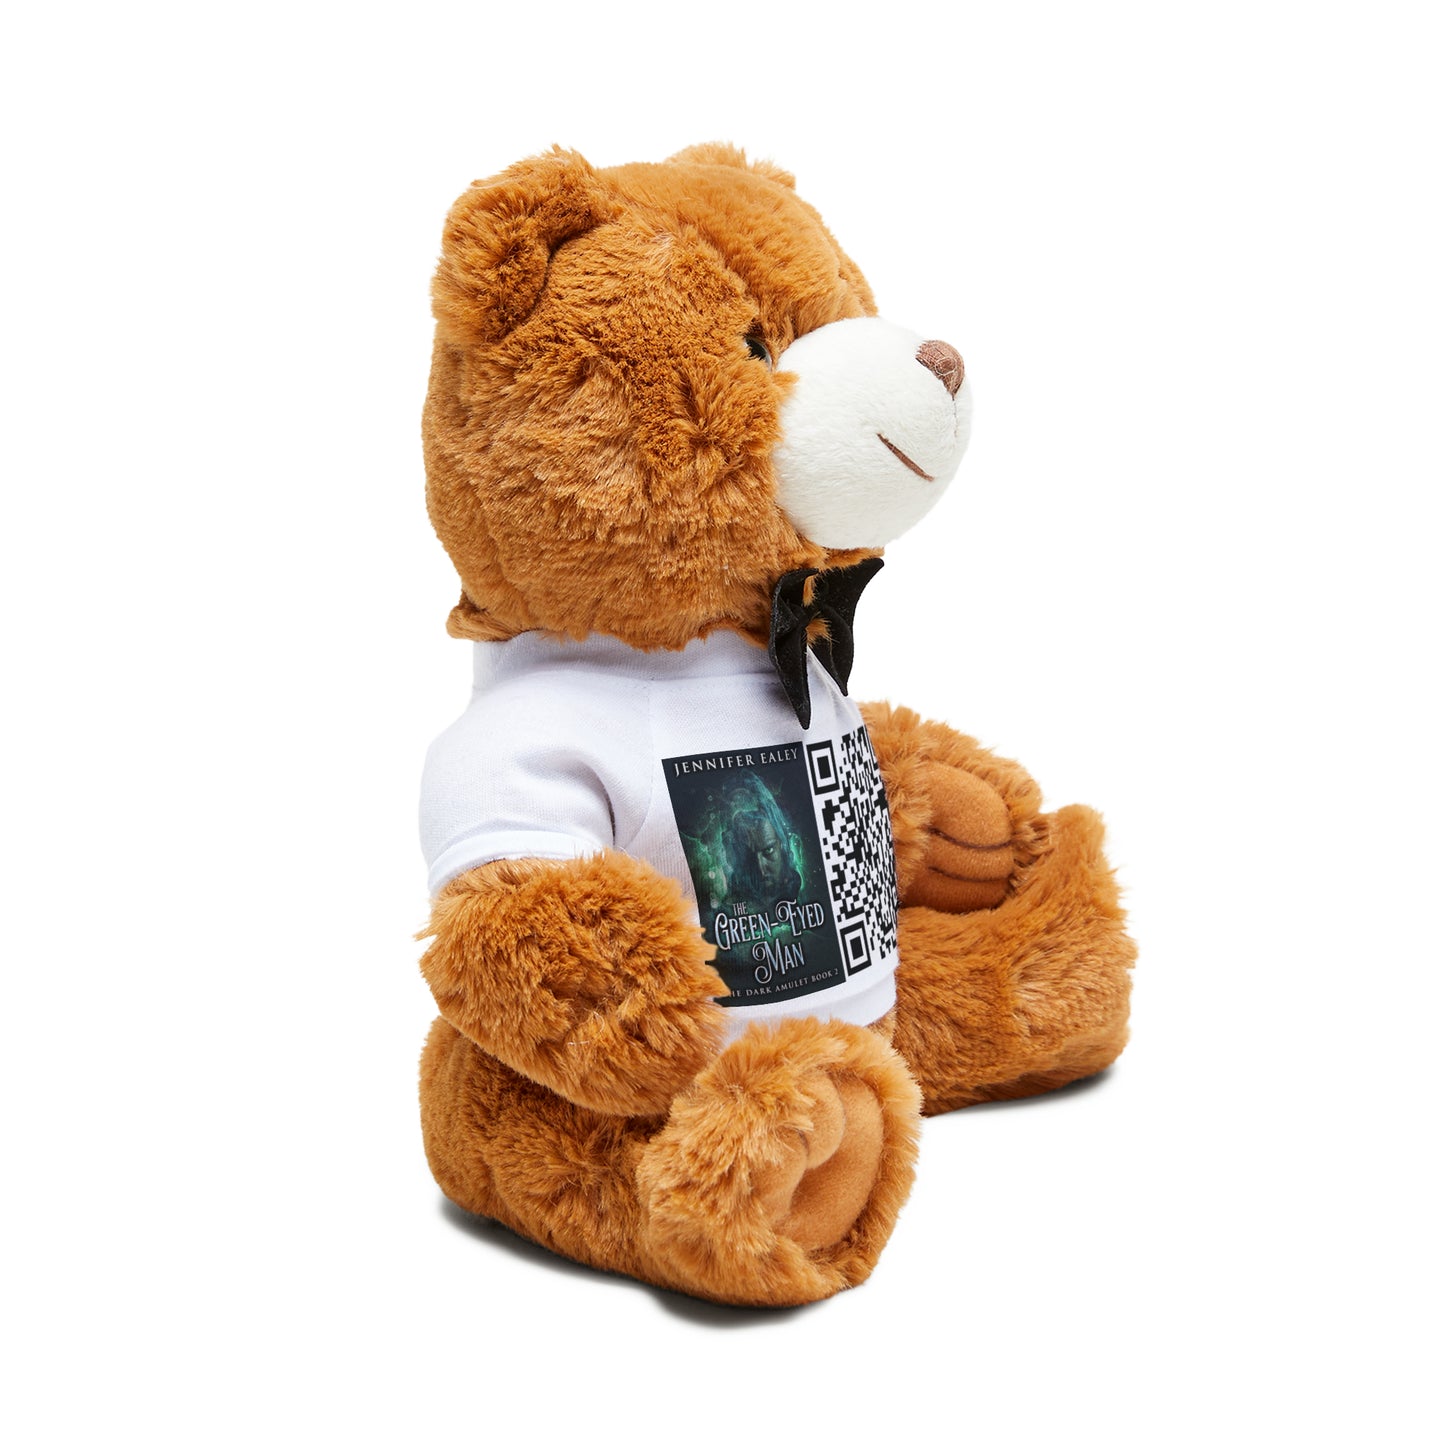 The Green-Eyed Man - Teddy Bear